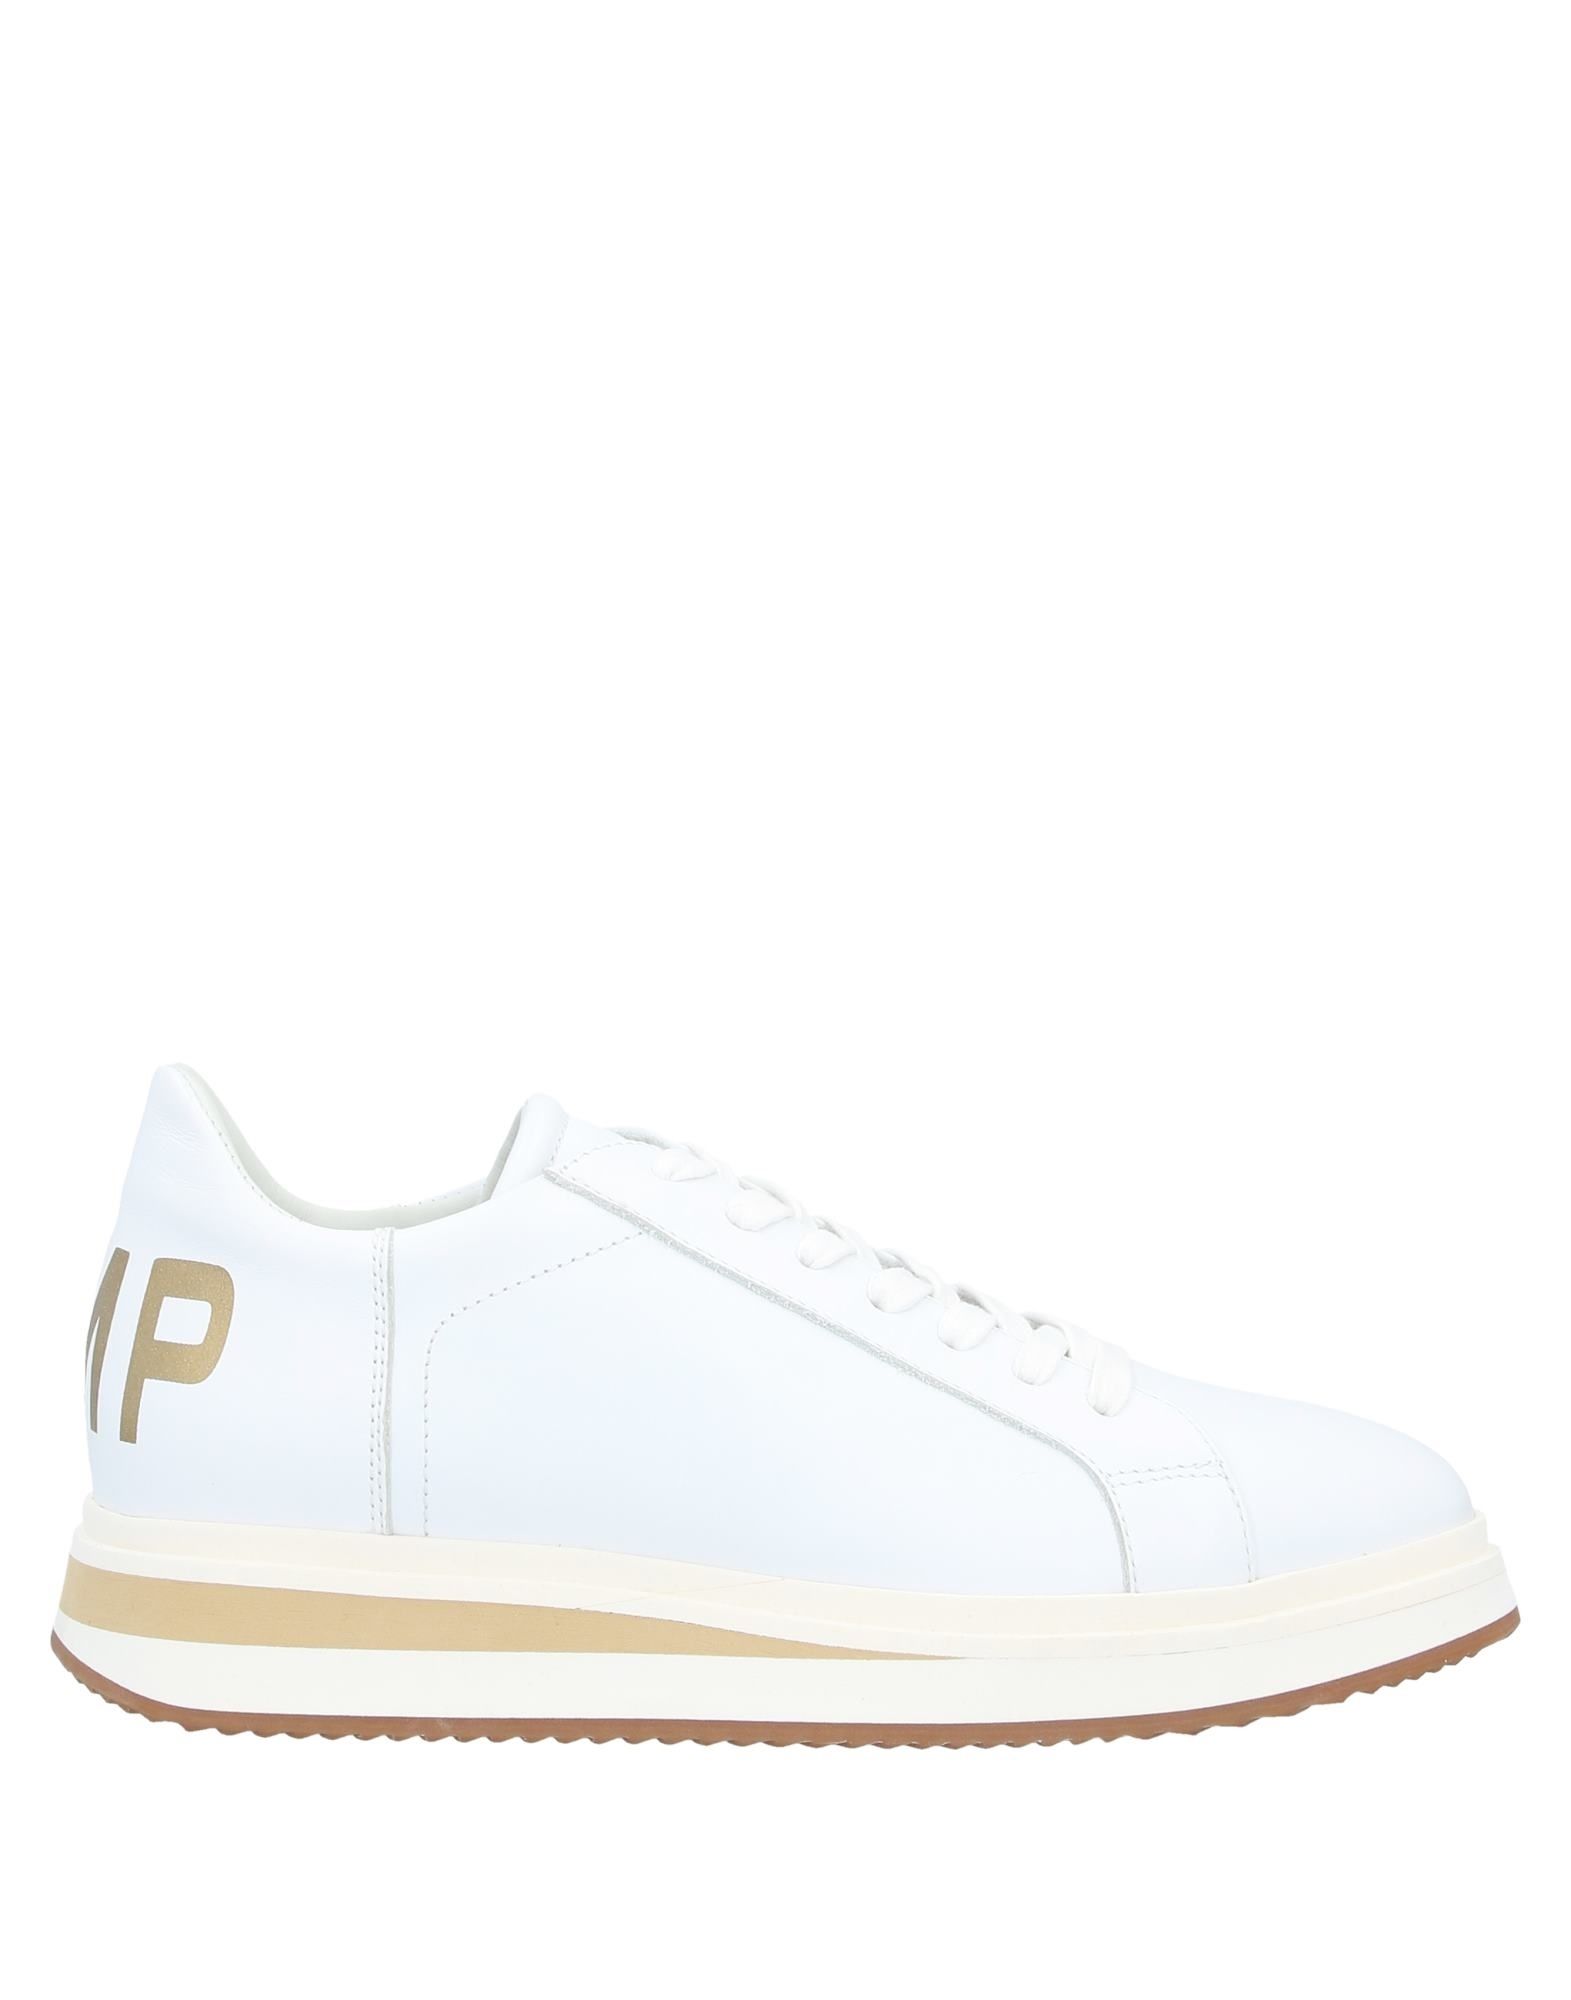 PHILIPPE MODEL Low-tops & sneakers - Item 11814612